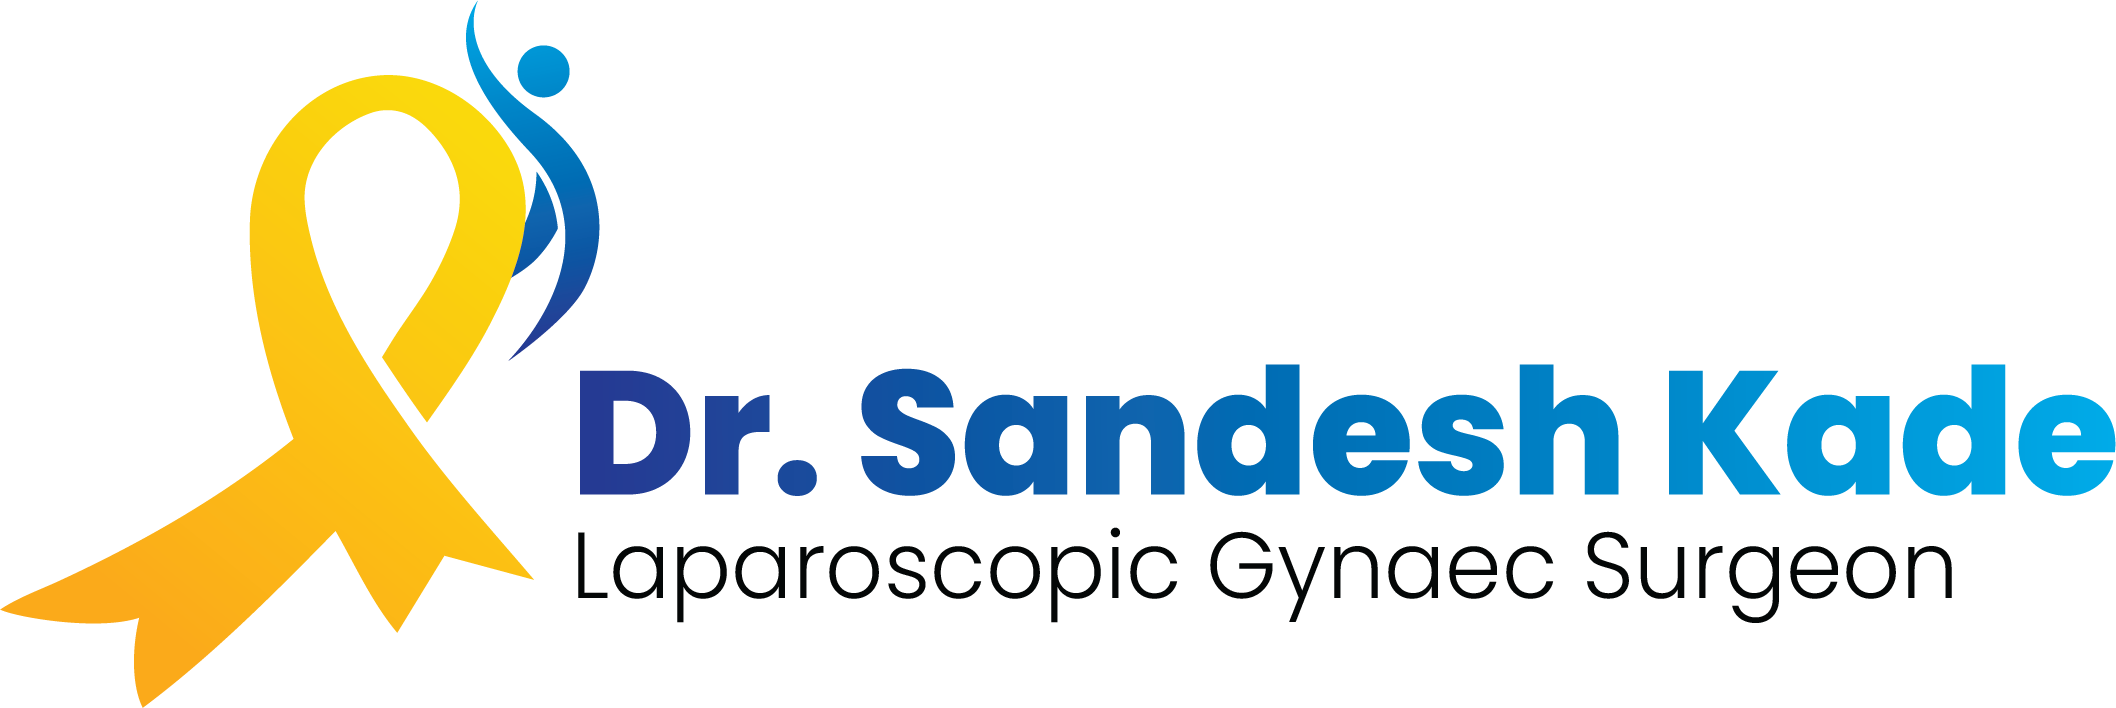 Dr Sandesh Kade Logo